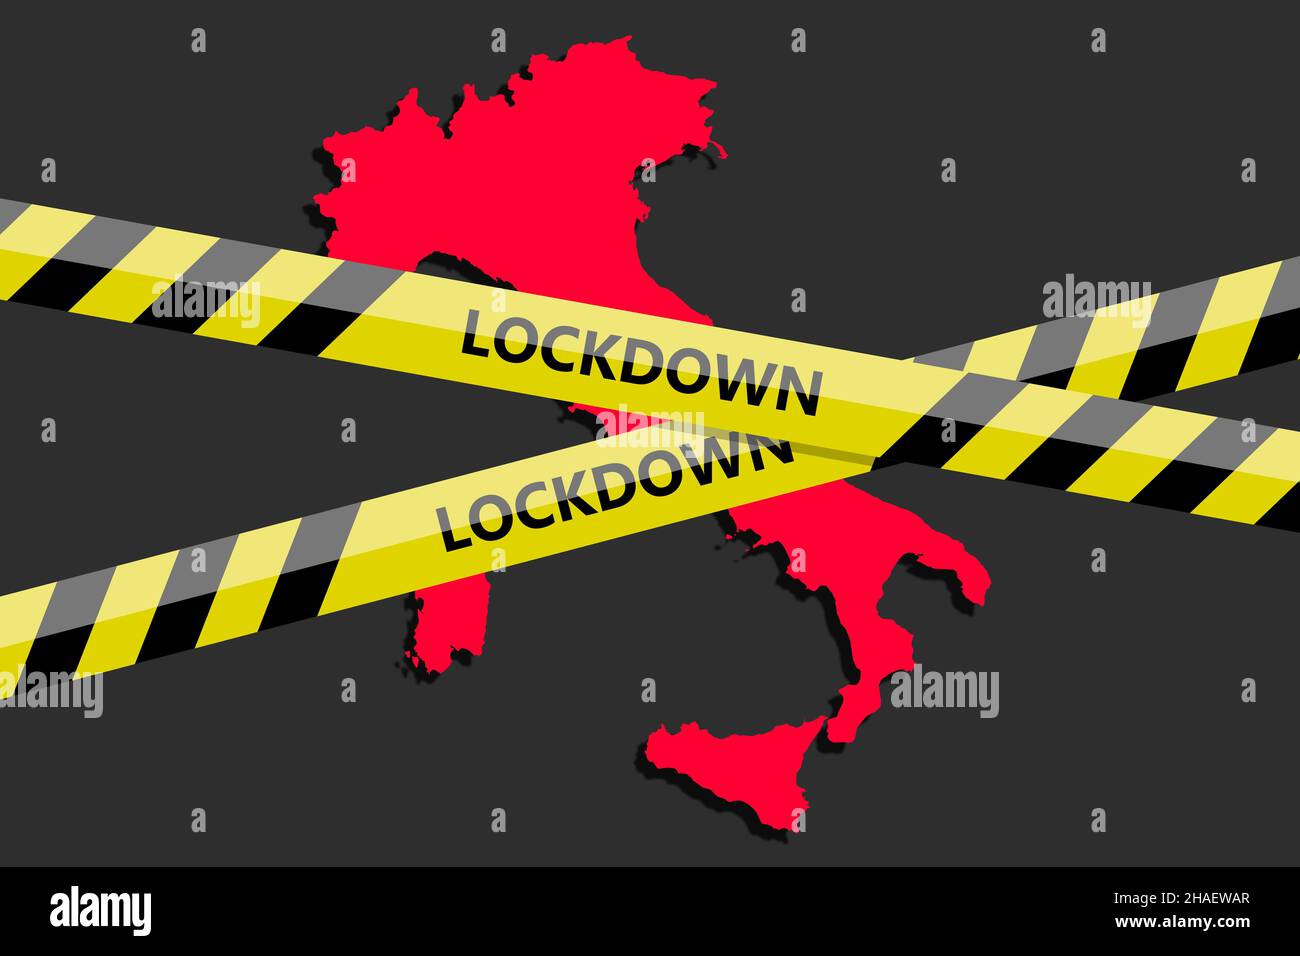 lockdown tape over italy silhouette. Coronavirus threat. Concept image. Vector illustration Stock Photo